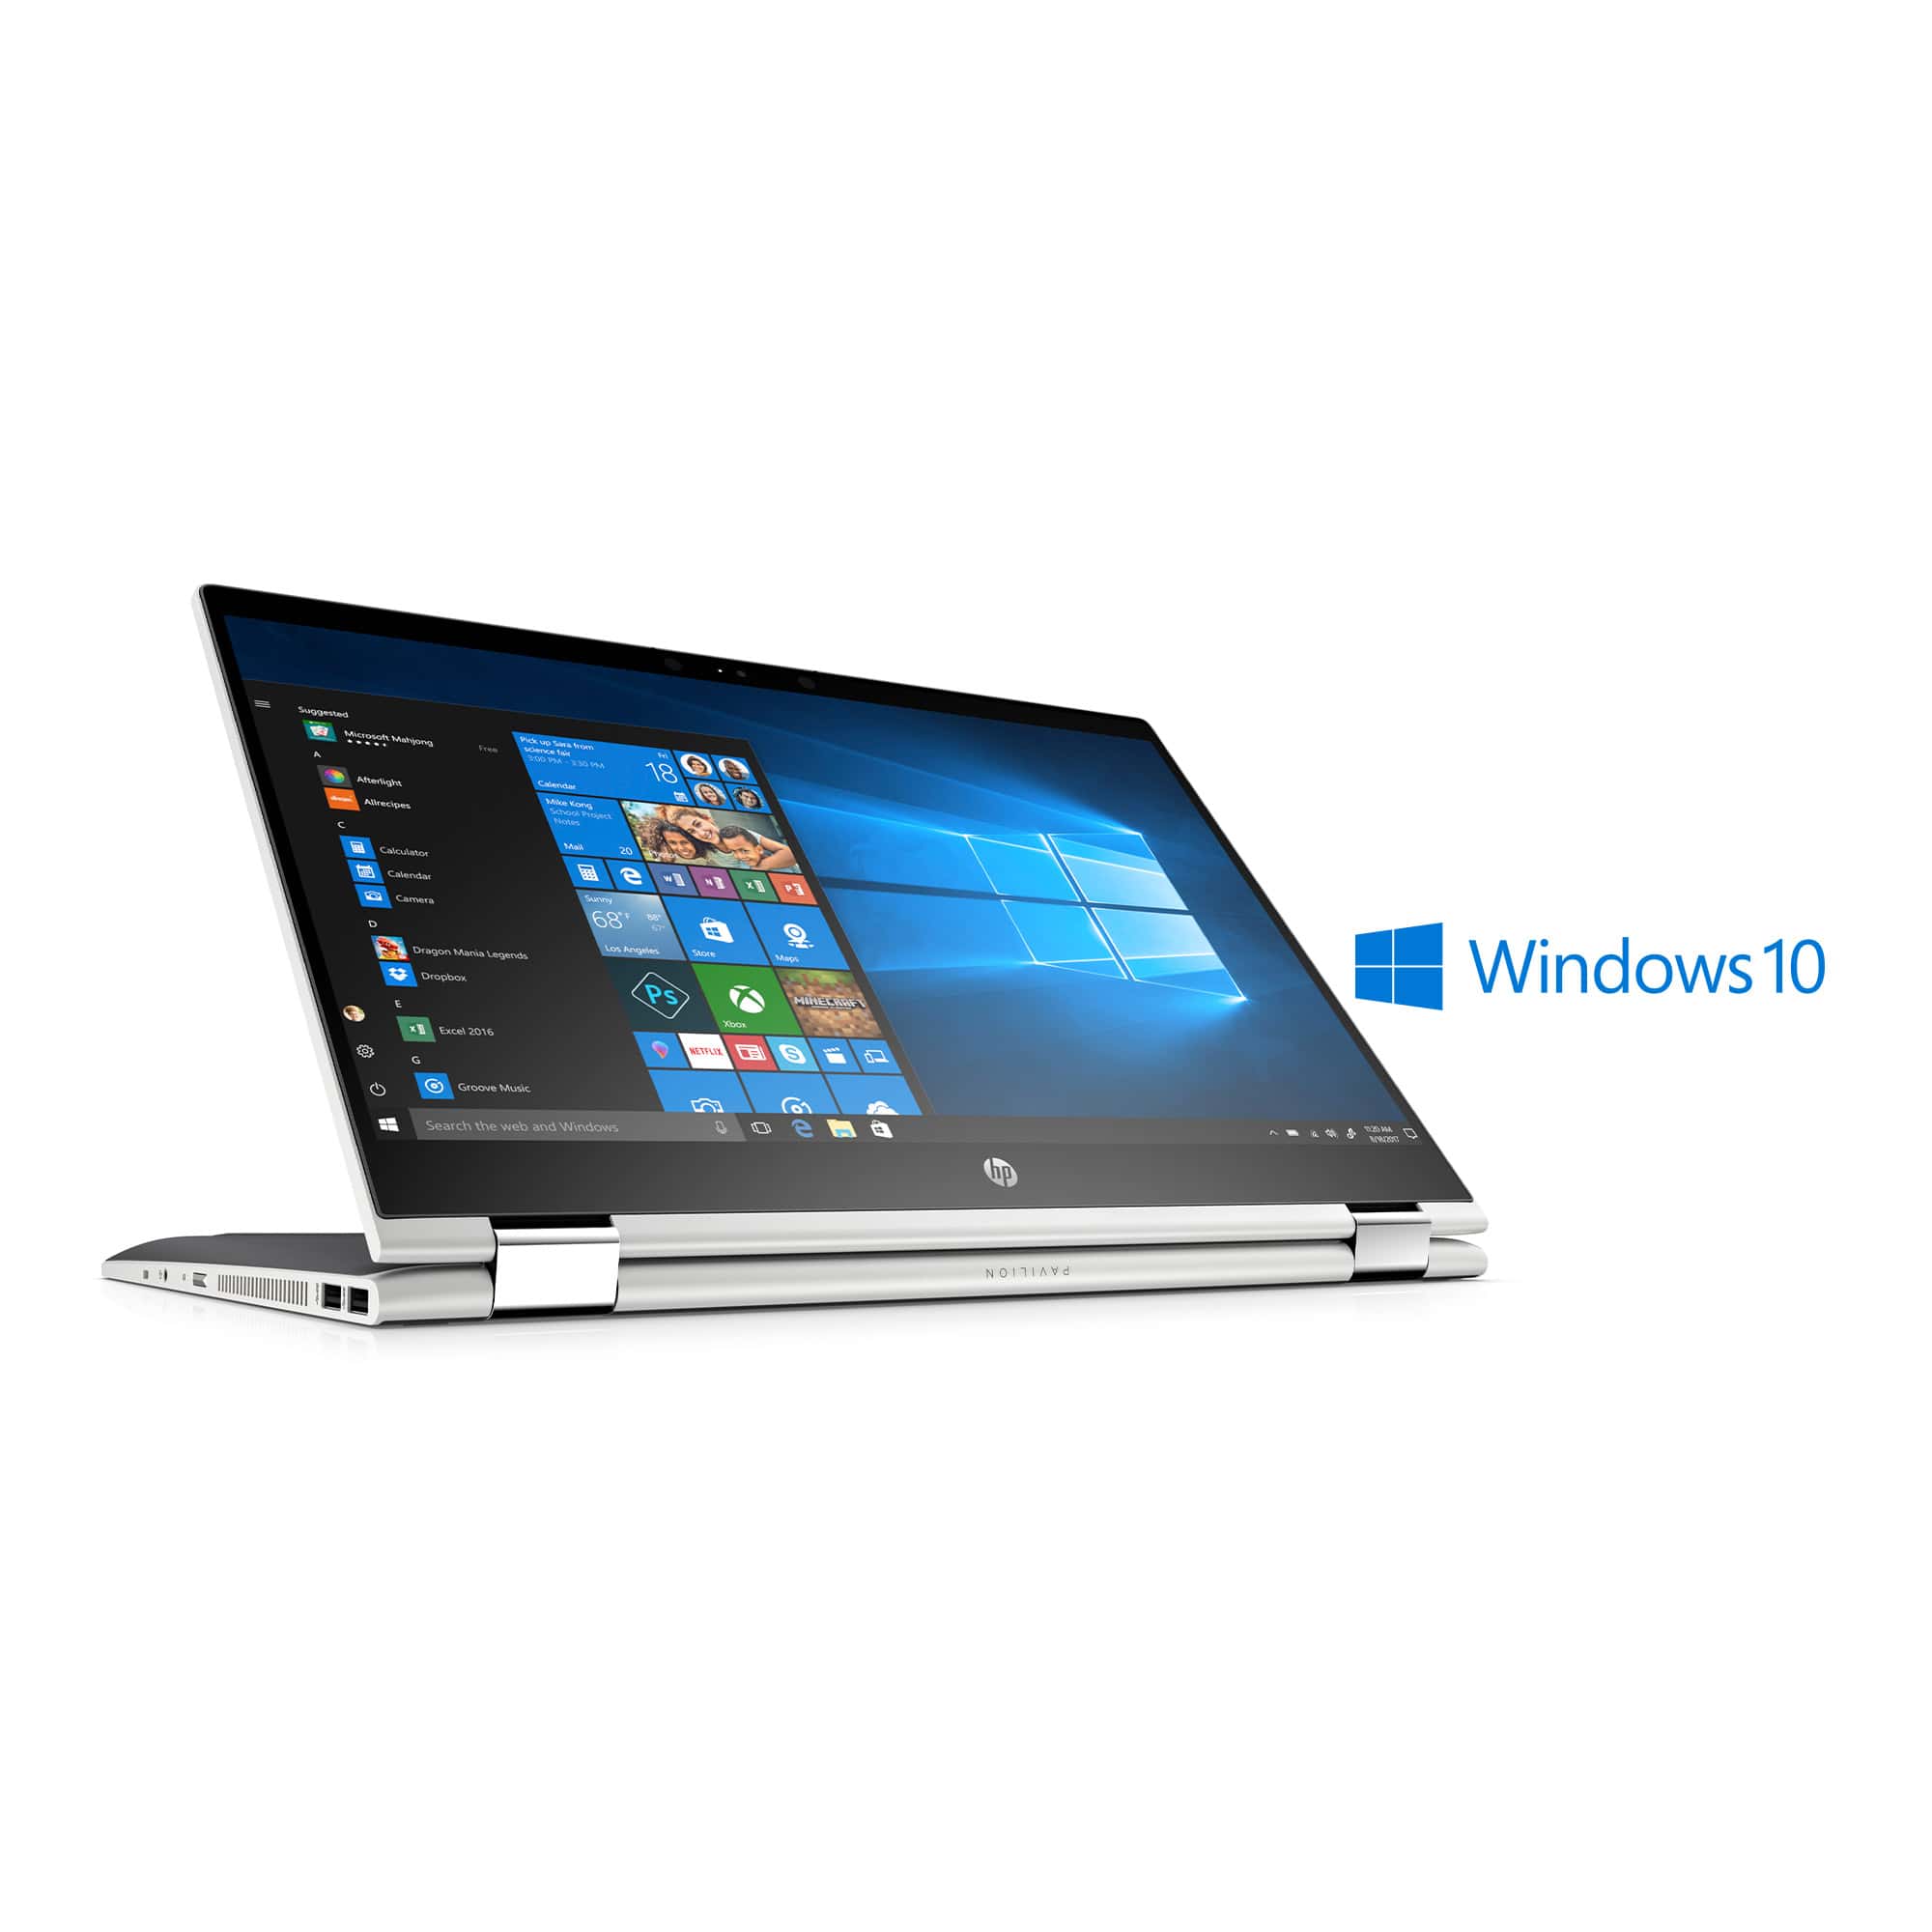 HP Pavilion X360 Convertible 2-in-1 Laptop Review - Appuals.com